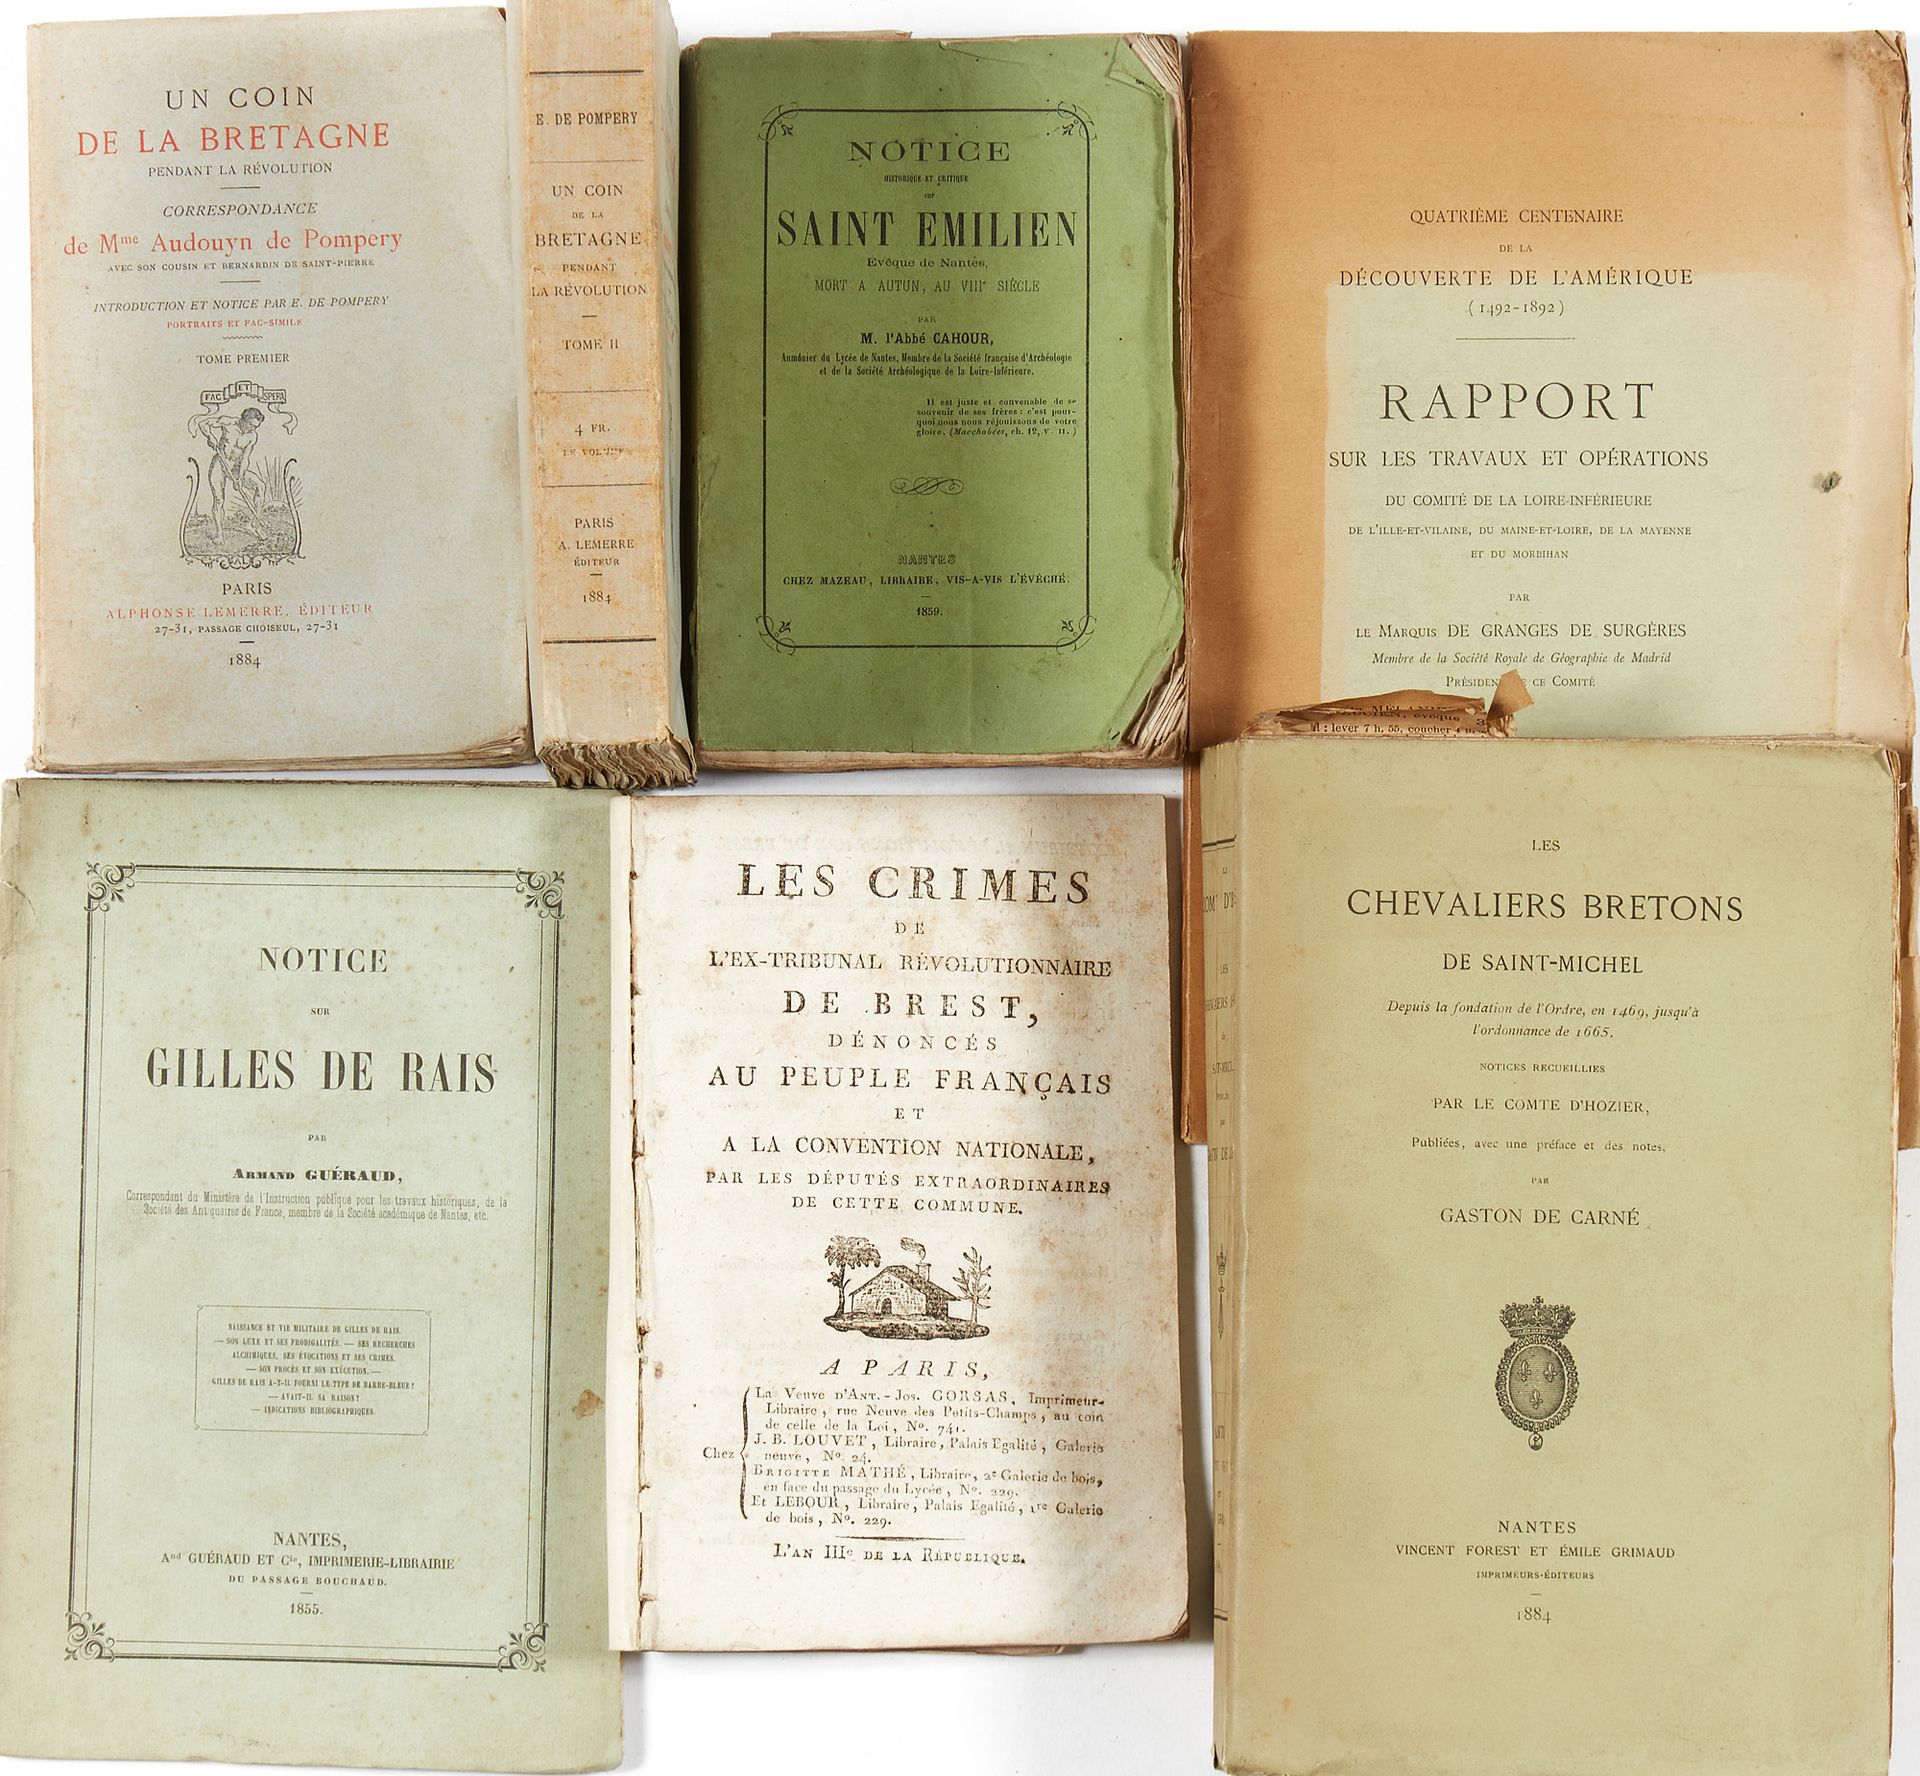 Null Histoire de la Bretagne. 1 lot de livres brochés :
- TROUILLE, Jean- Nicola&hellip;